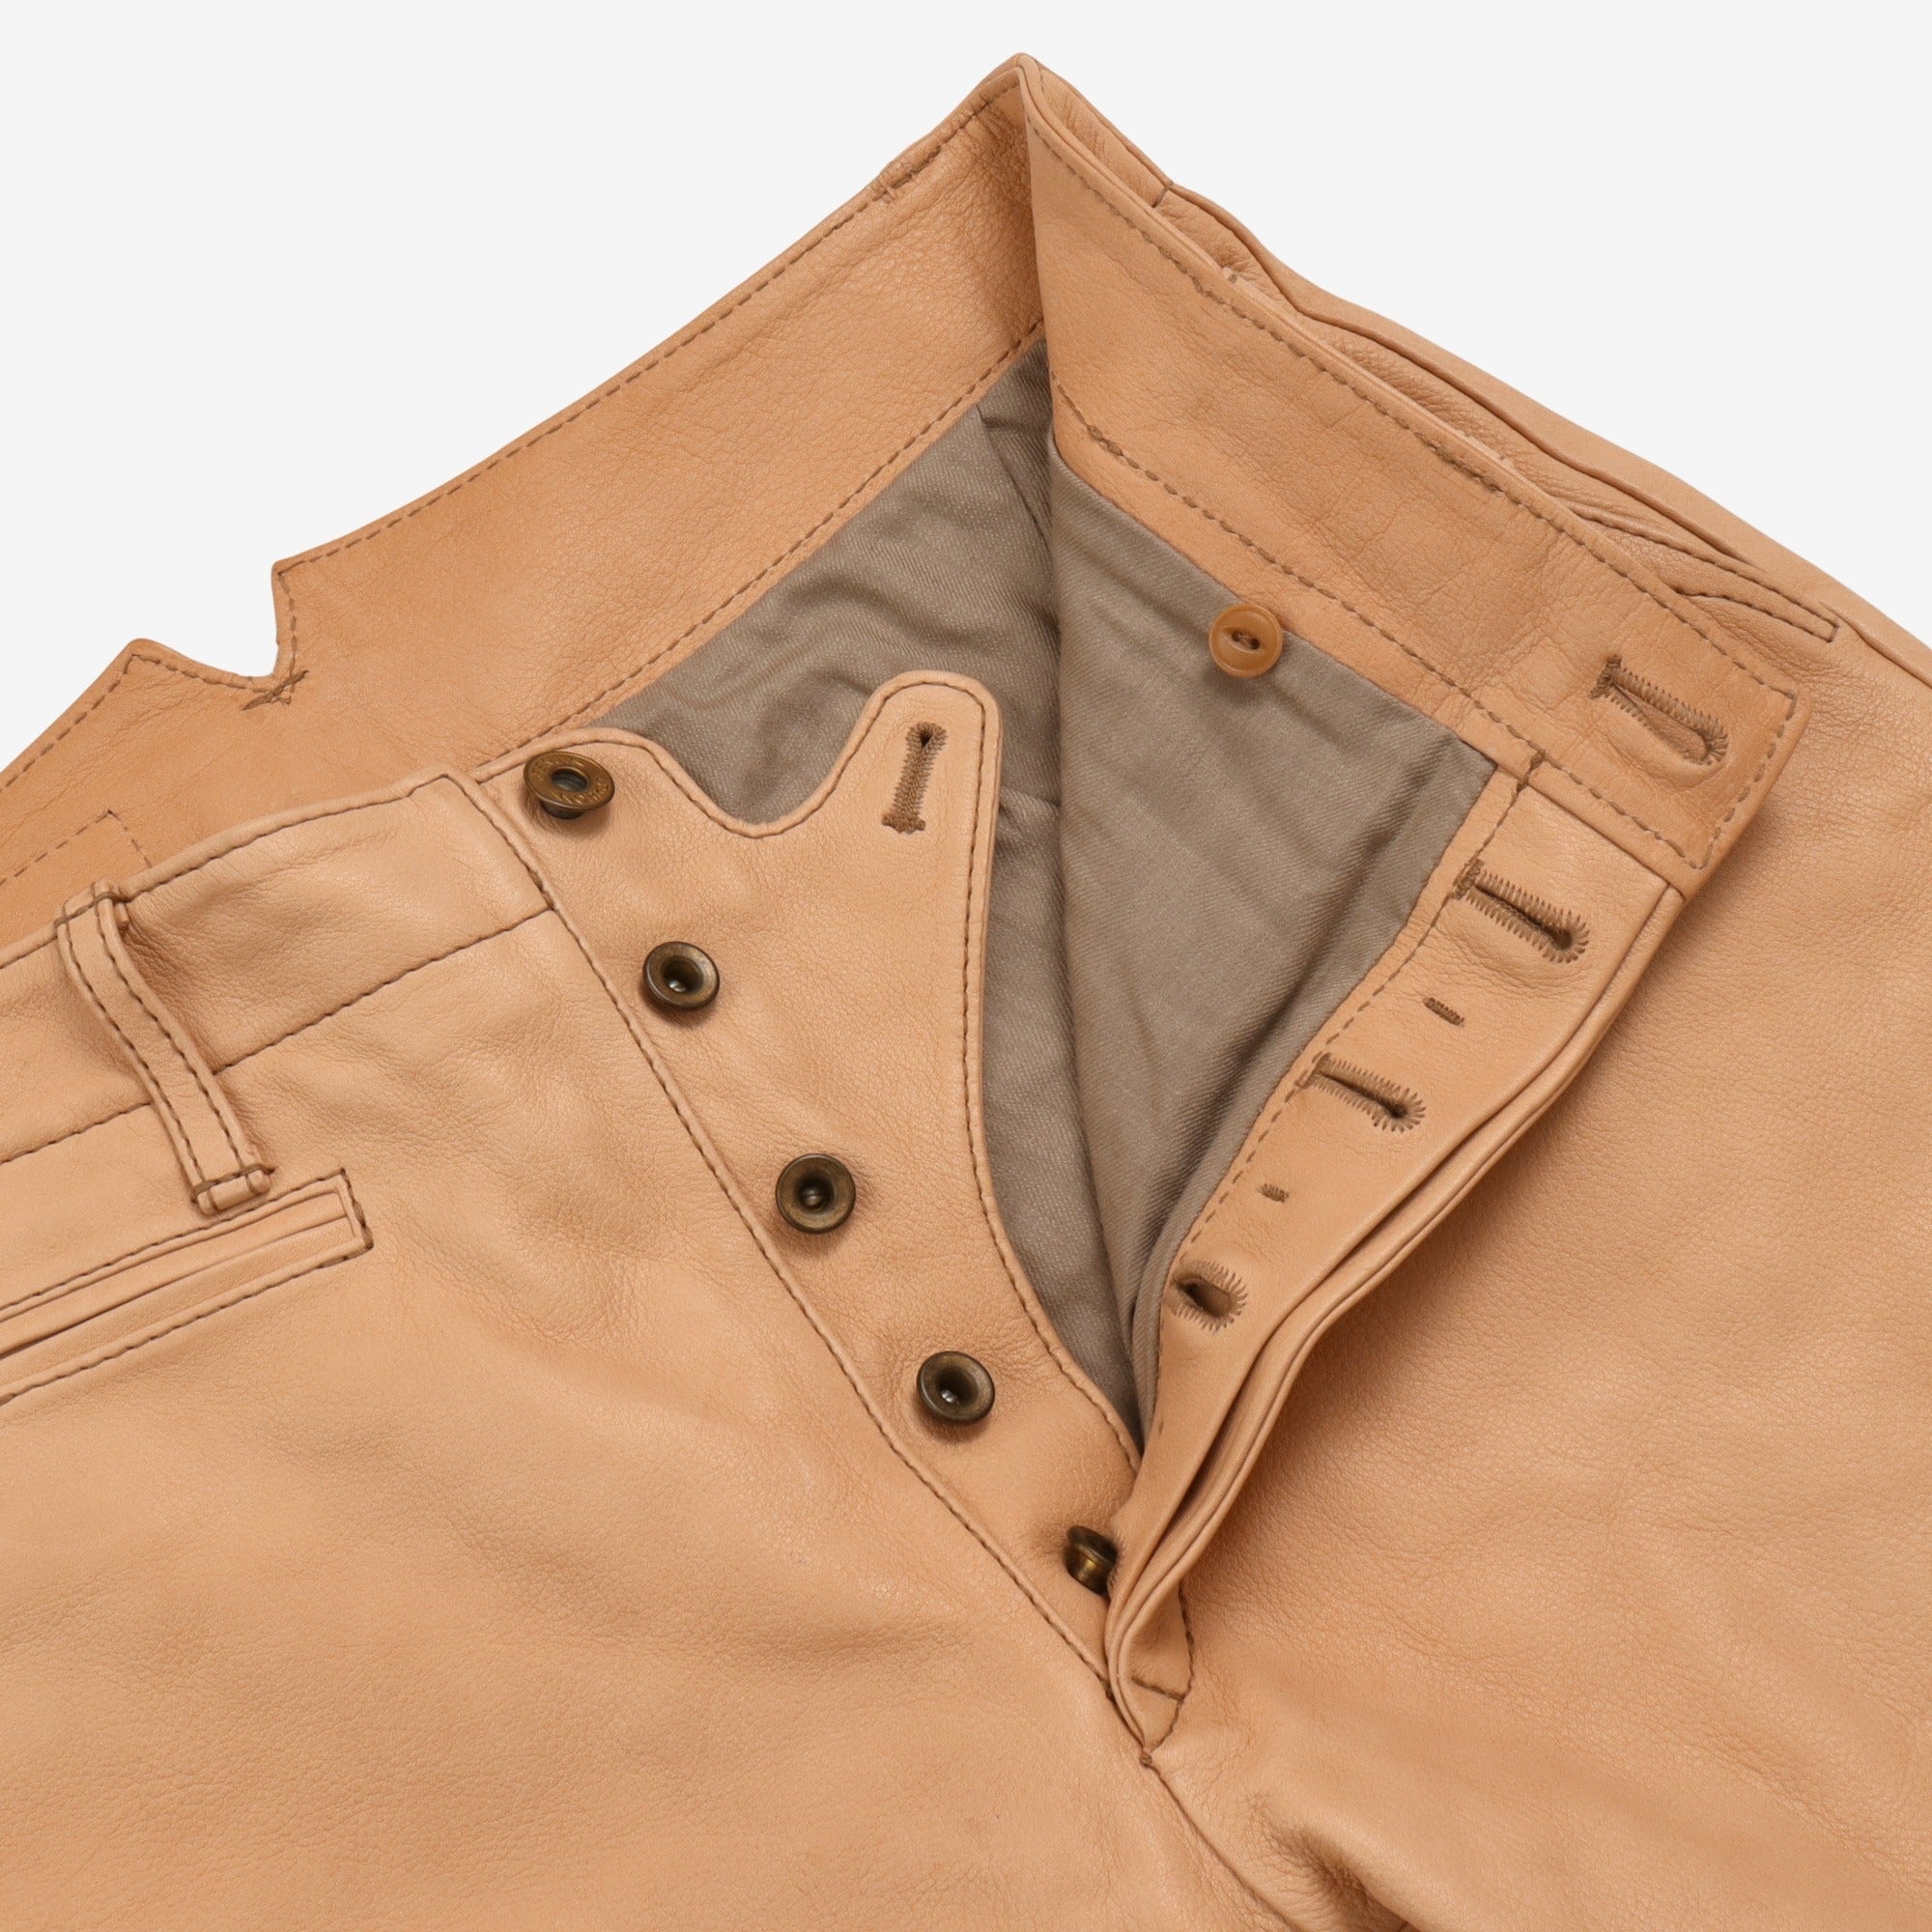 CP02 Leather Craftsman Pants (30W x 32L)